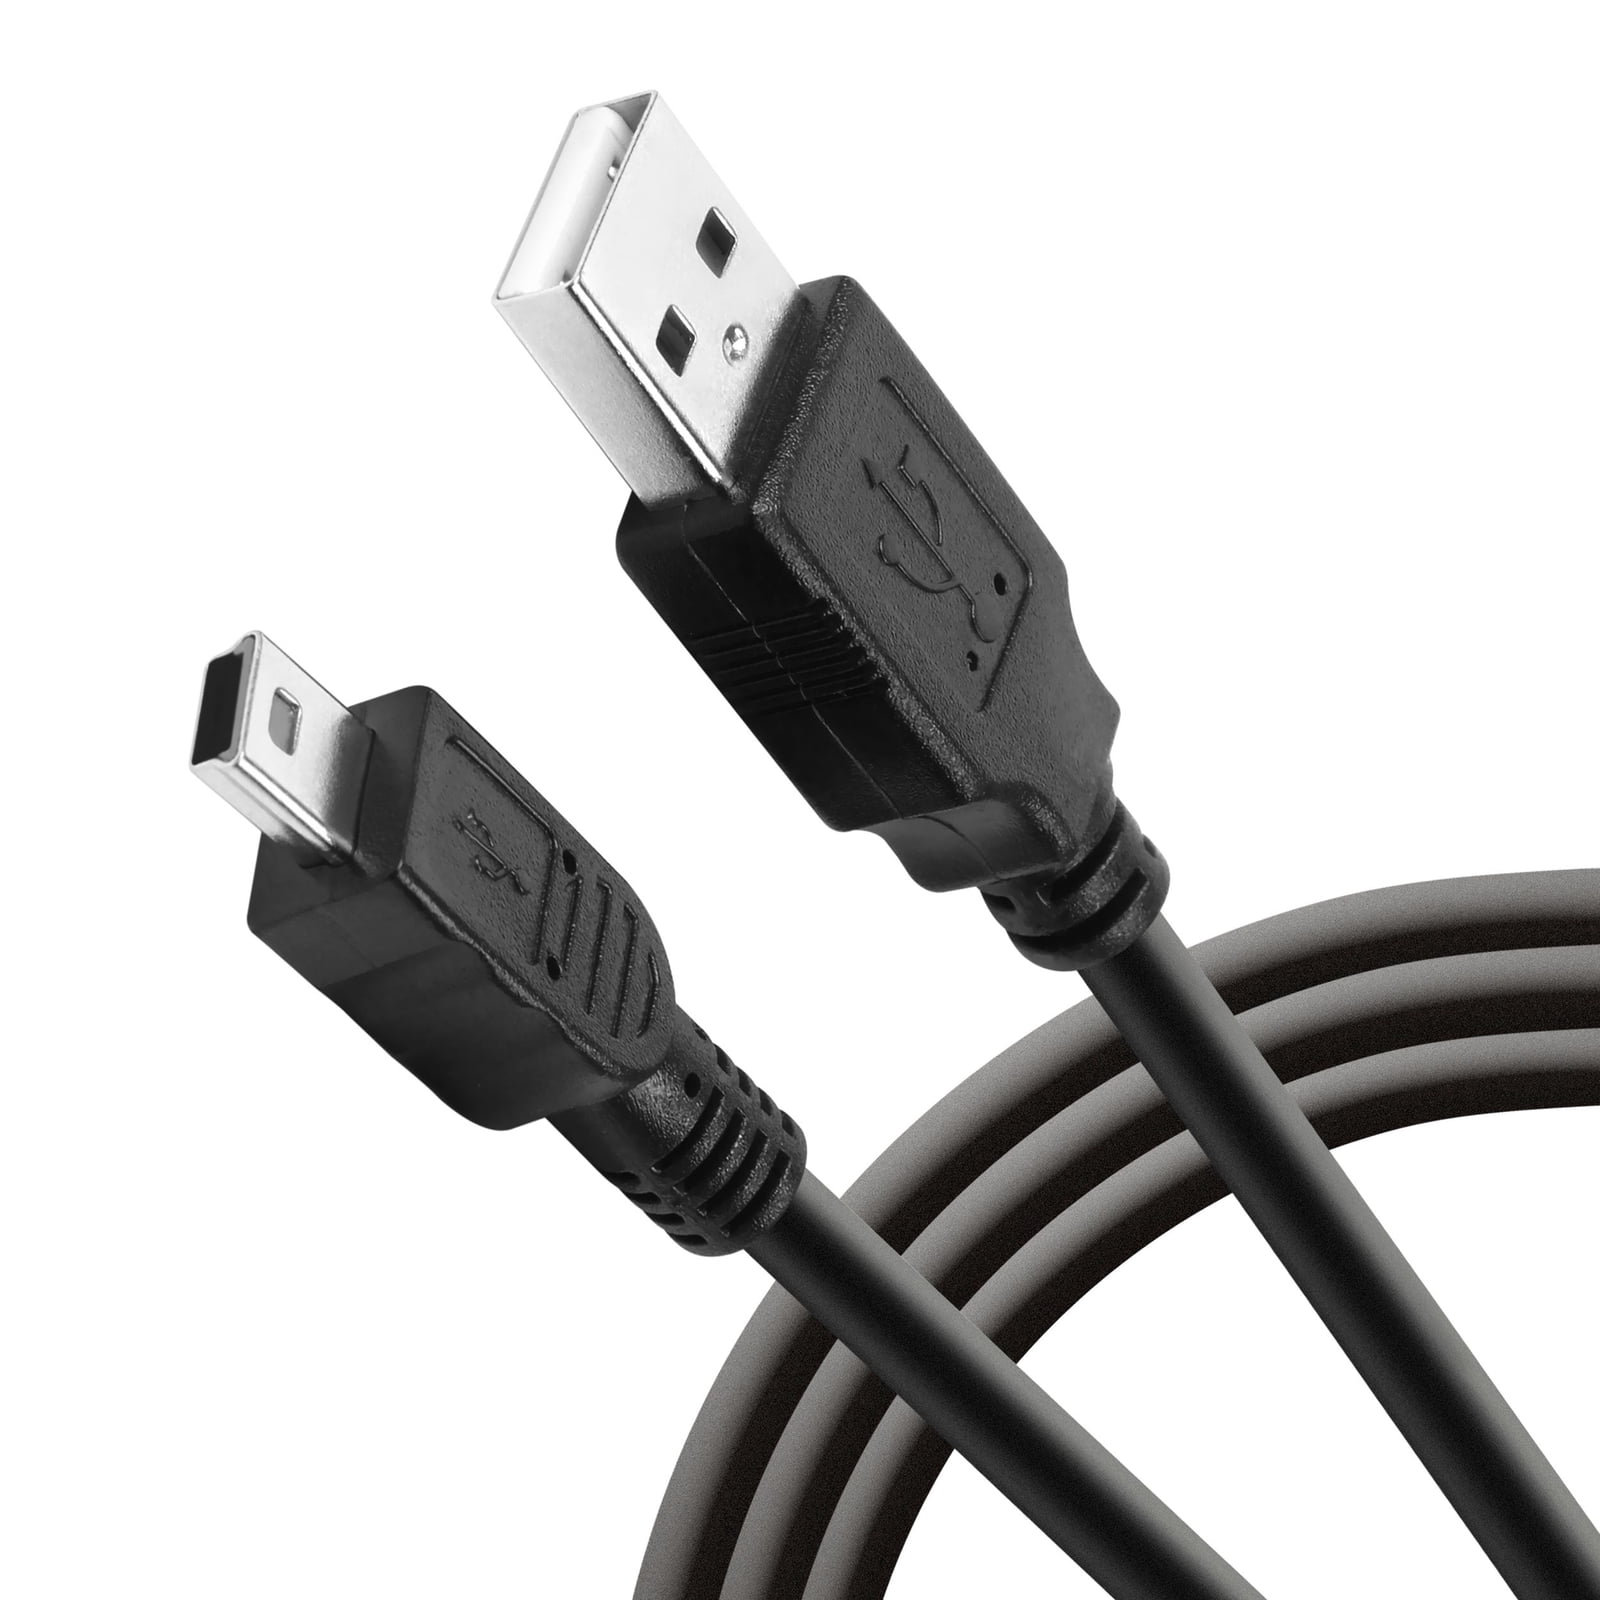 Mini USB Cable Data Sync Cord Wire for Sony CyberShot Digital Camera MP3 